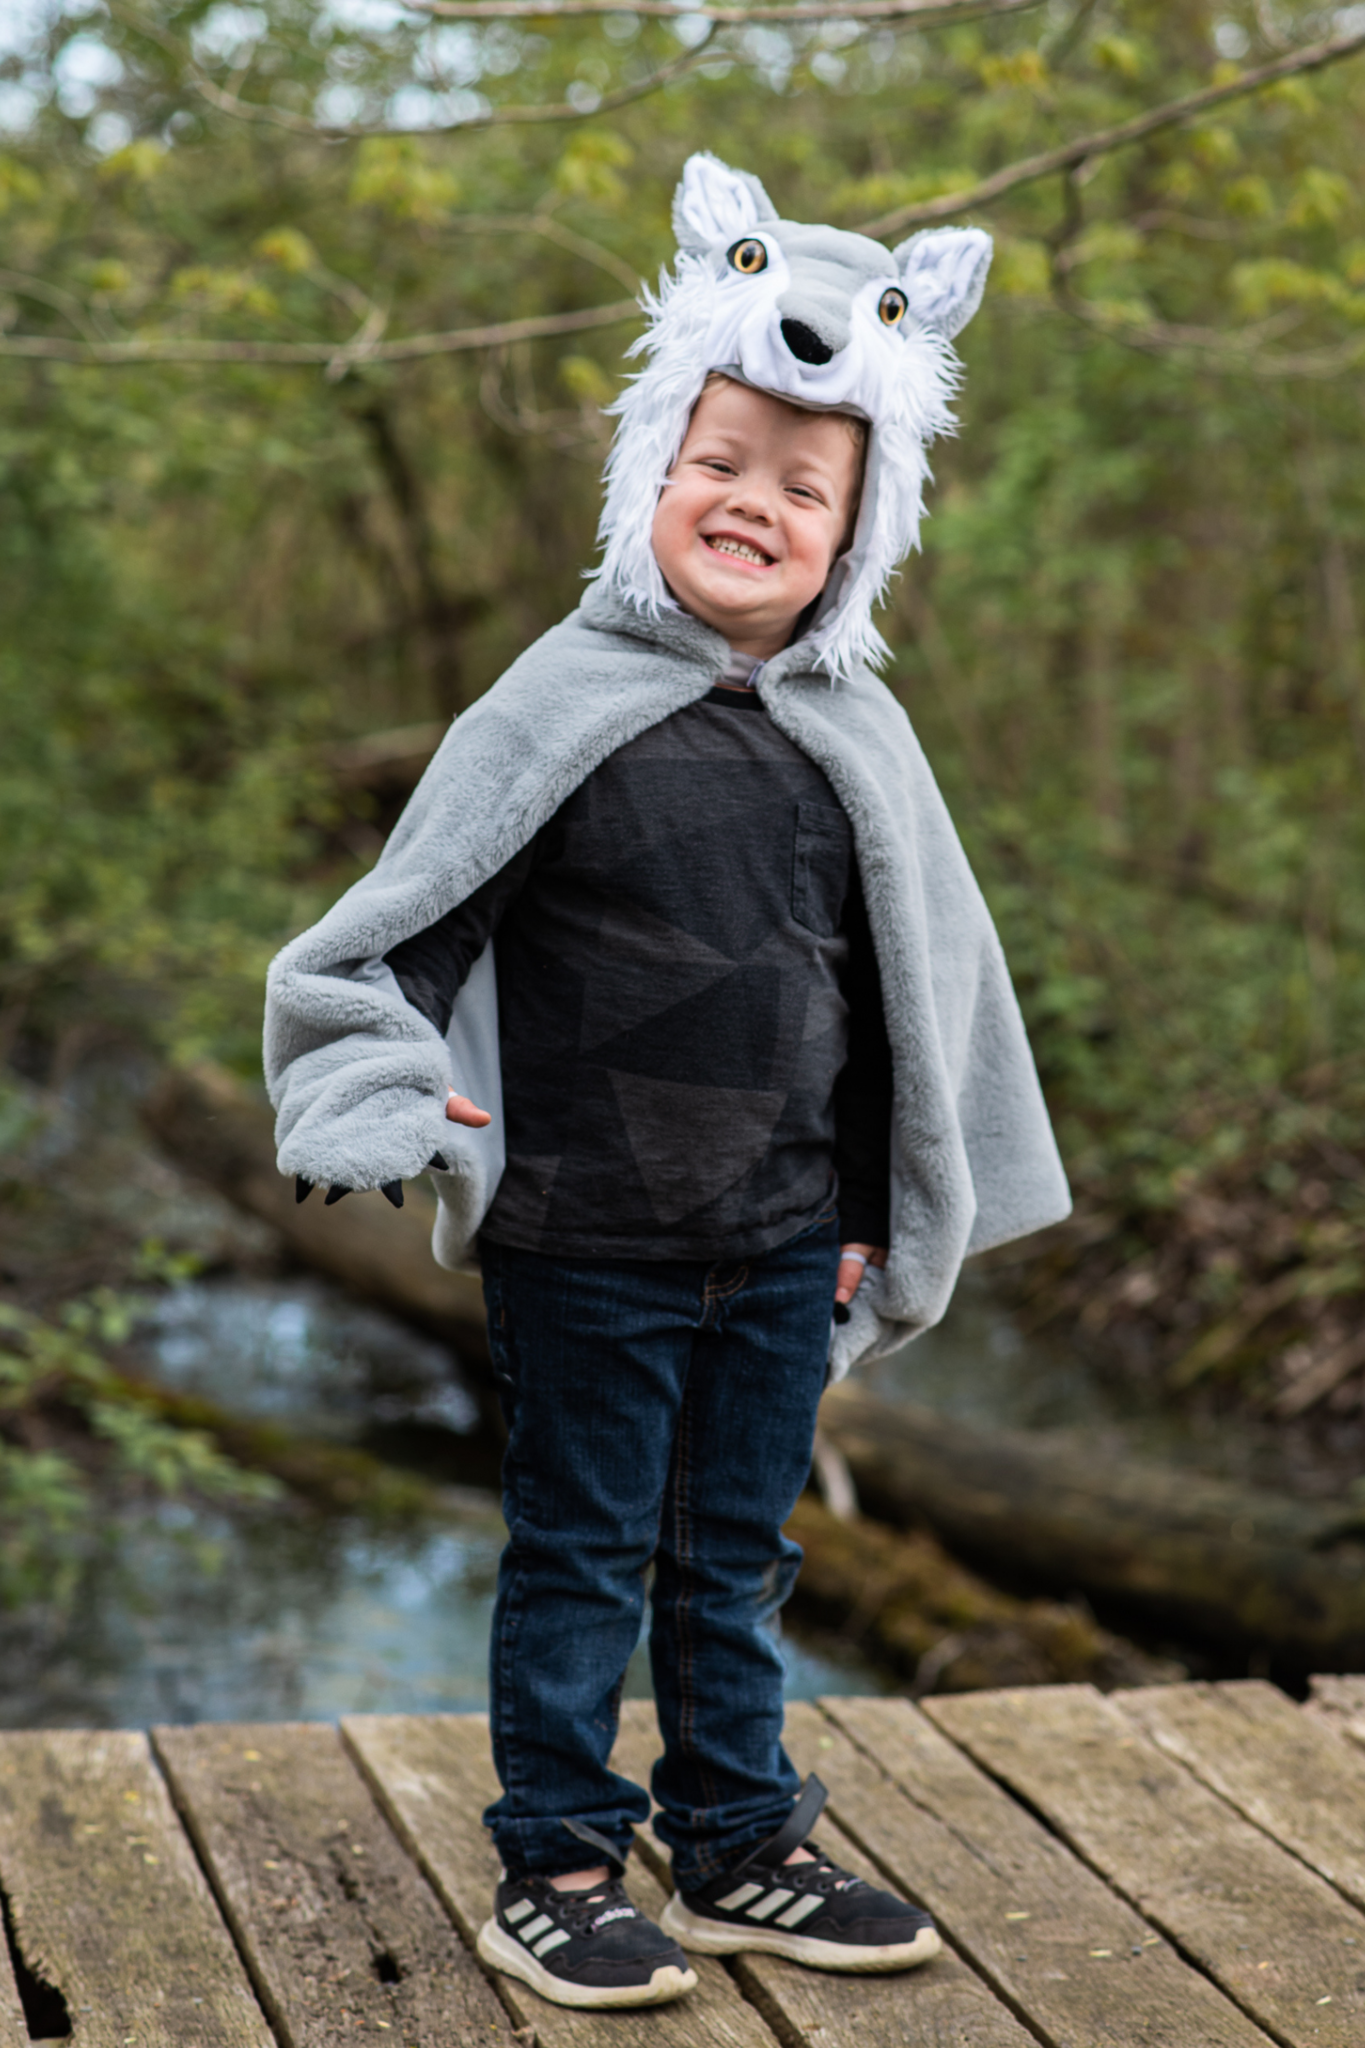 Boy's Toddler Yeti Costume 